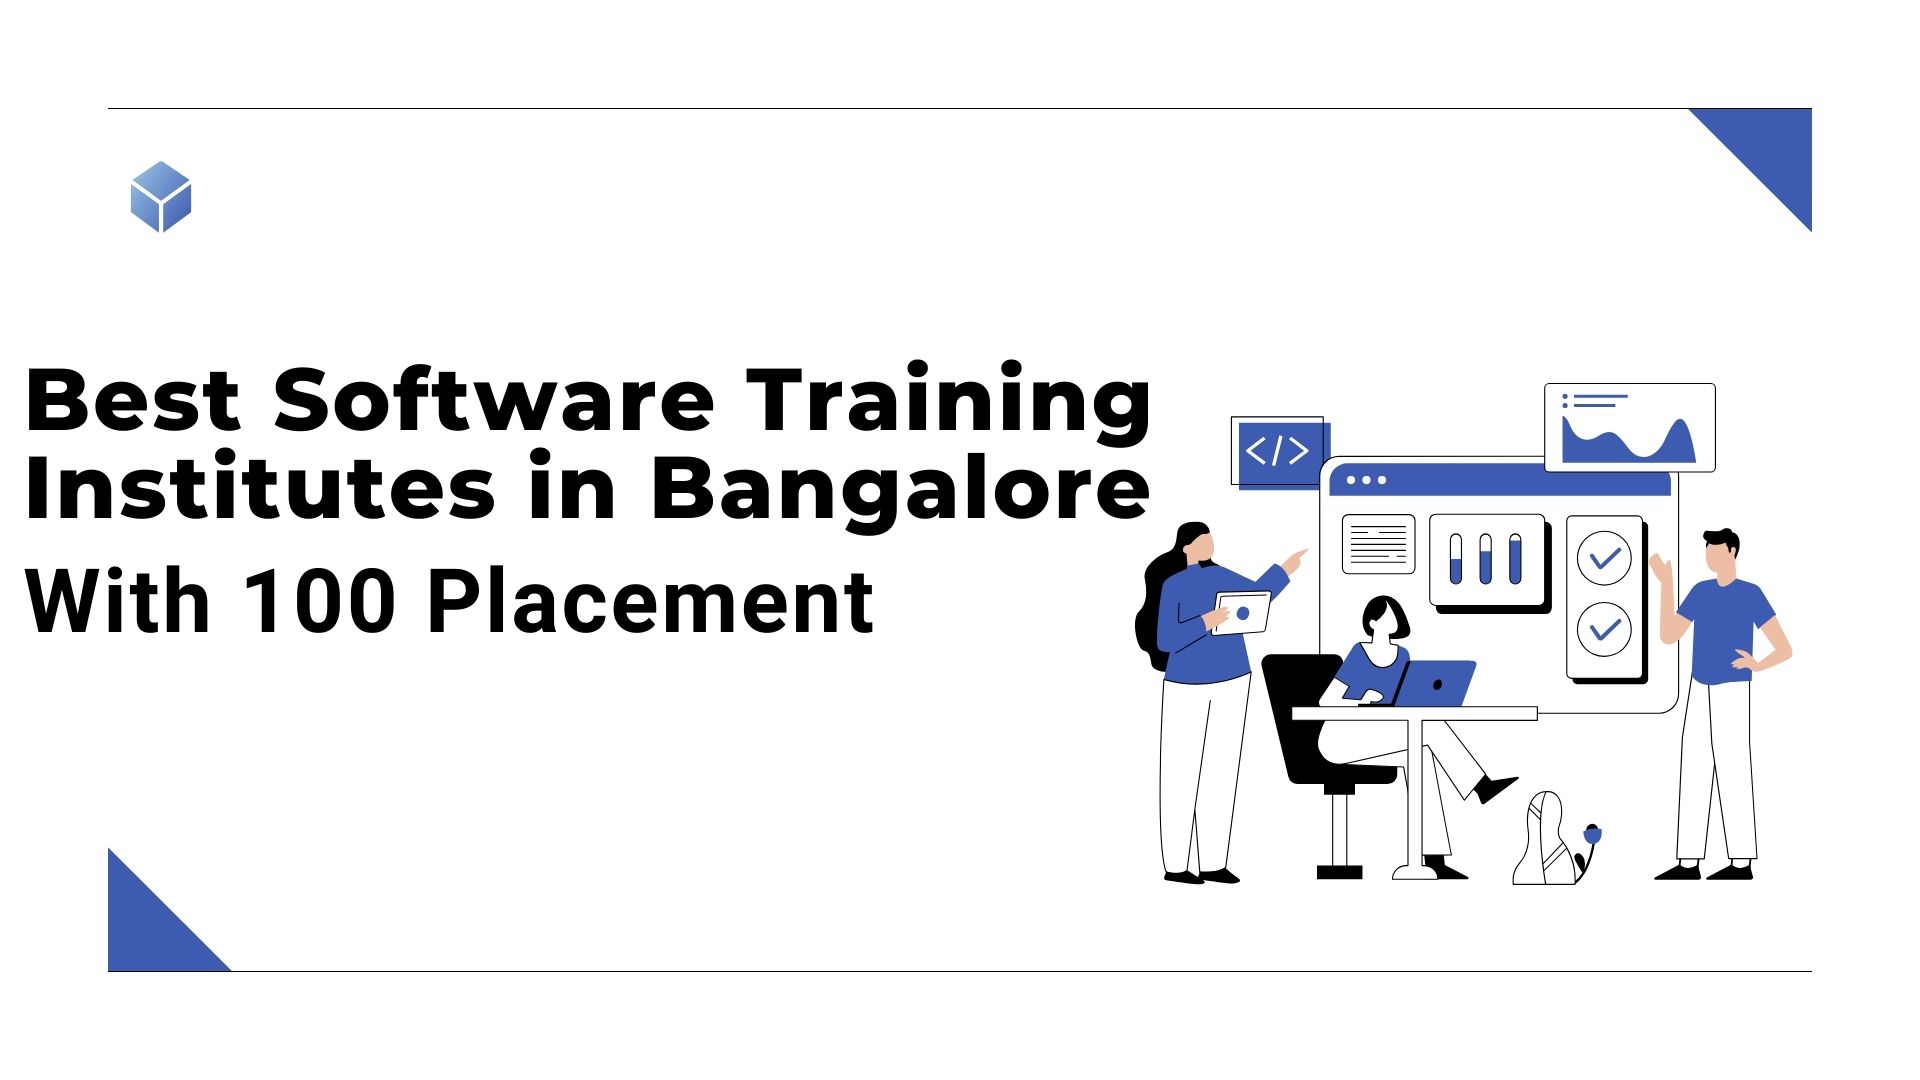 Ascent Software Training Institute for Career Growth - Karnataka - Bangalore ID1537850 1